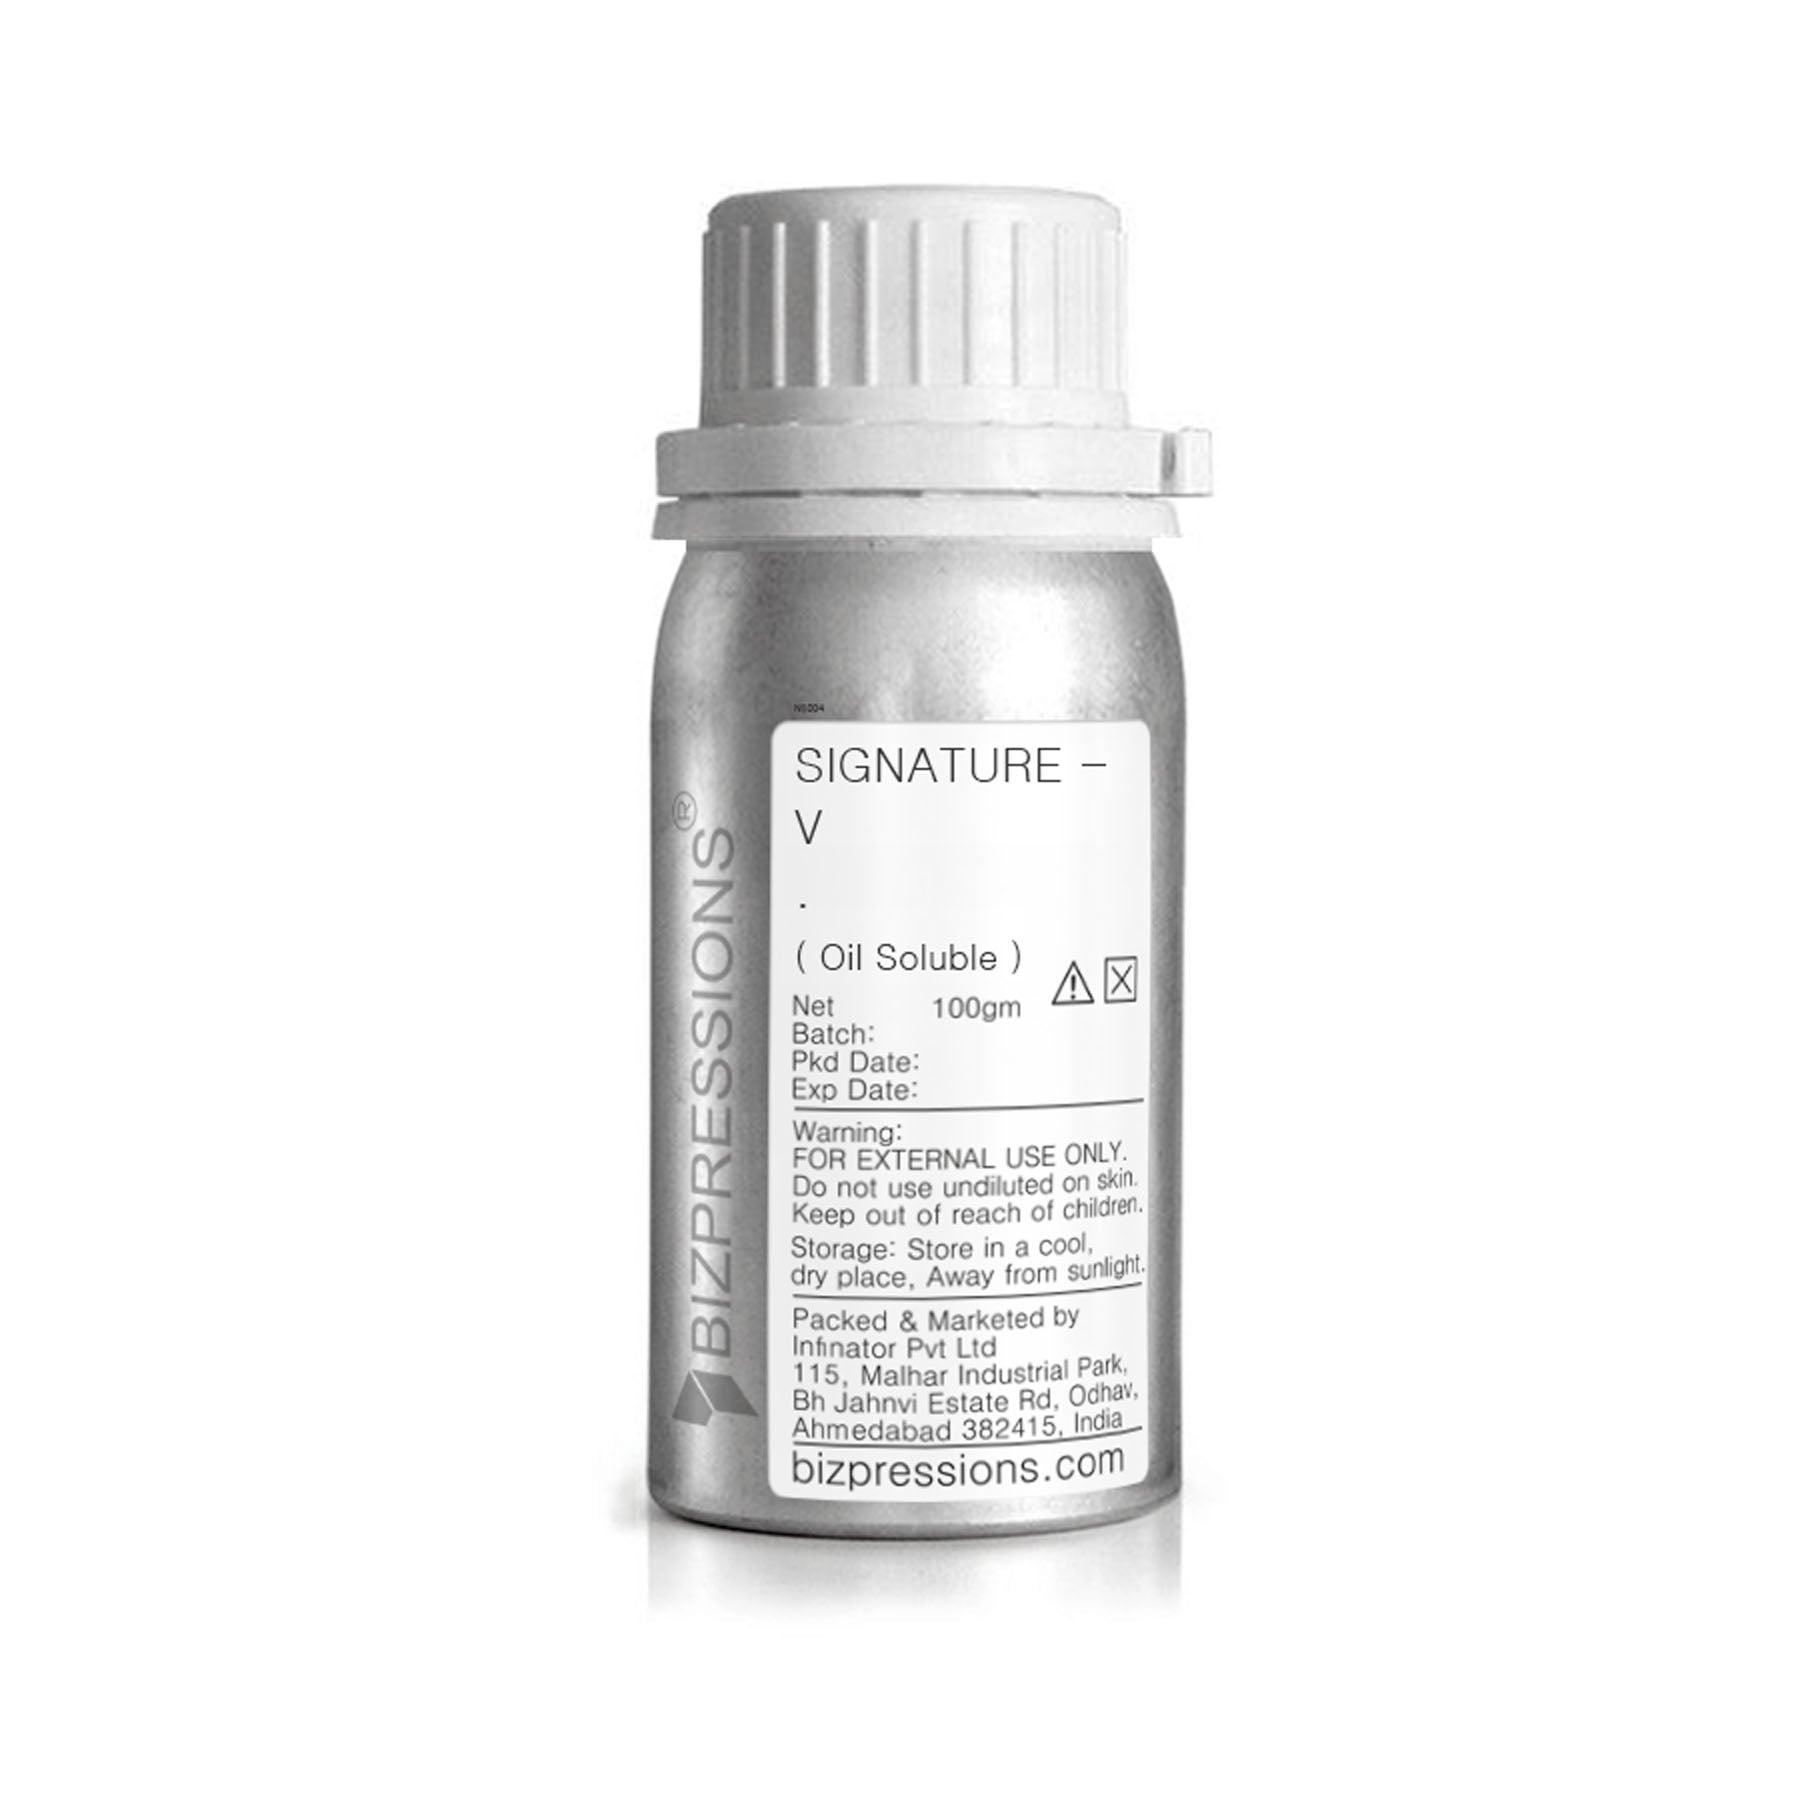 SIGNATURE -V - Fragrance ( Oil Soluble ) - 100 gm